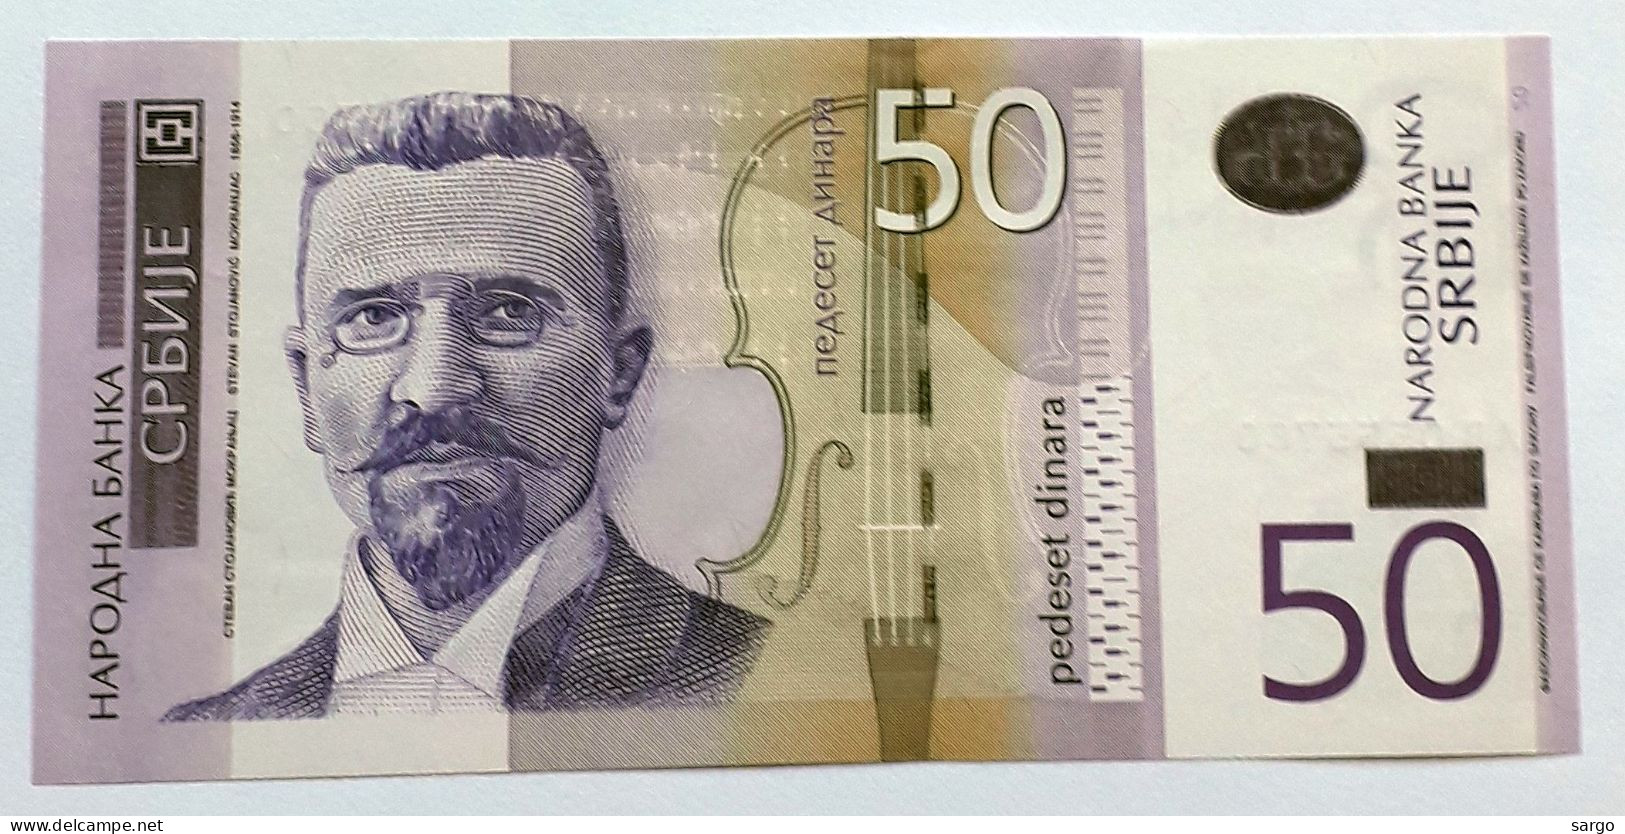 SERBIA - 50 DINARA  - P 56A  (2011)  - UNC -  BANKNOTES - PAPER MONEY - CARTAMONETA - - Serbie